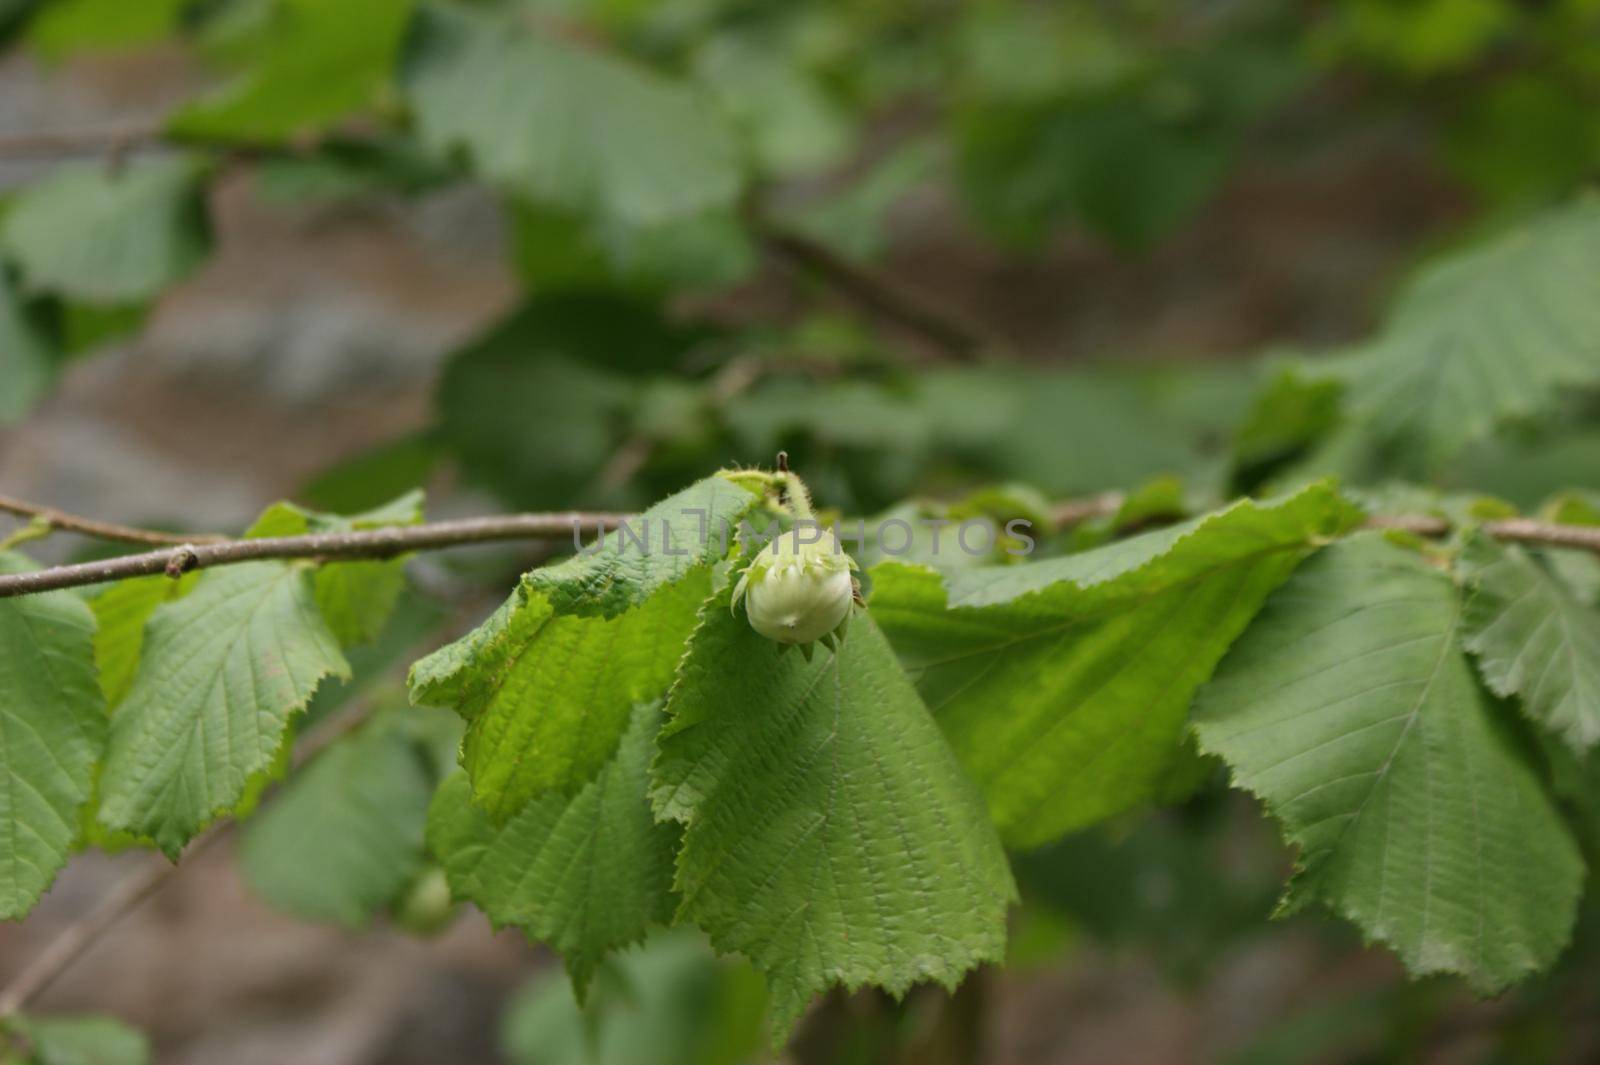 Wild unripe hazelnuts growing on a branch of a hazelnut bush tree with green leafs in the summer